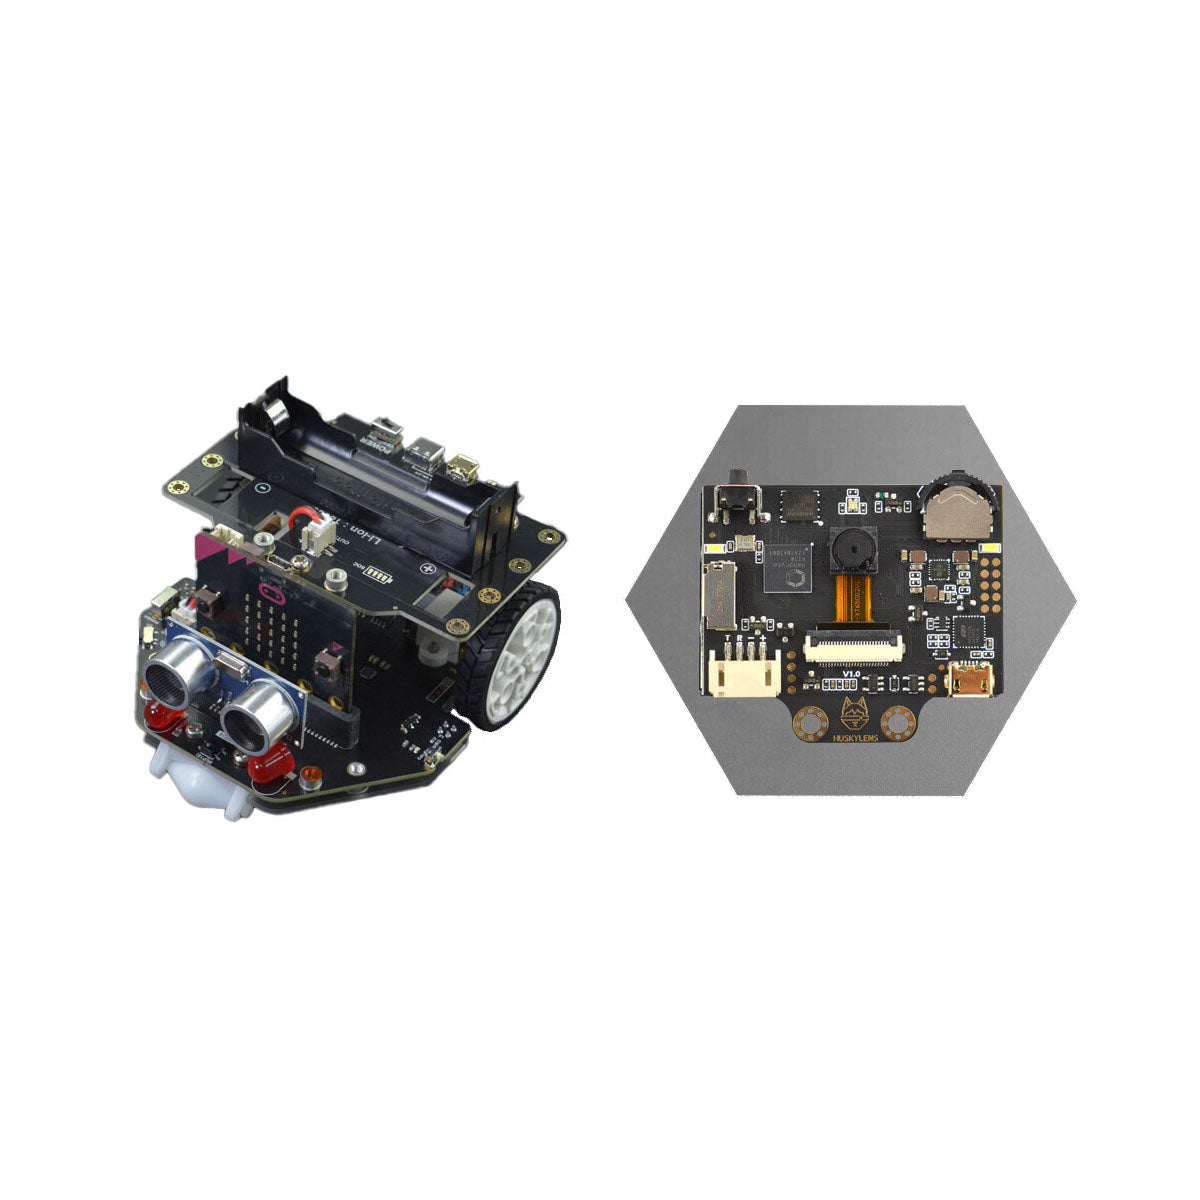 DF Robot micro: Maqueen Robot Plus V2 with HUSKYLENS